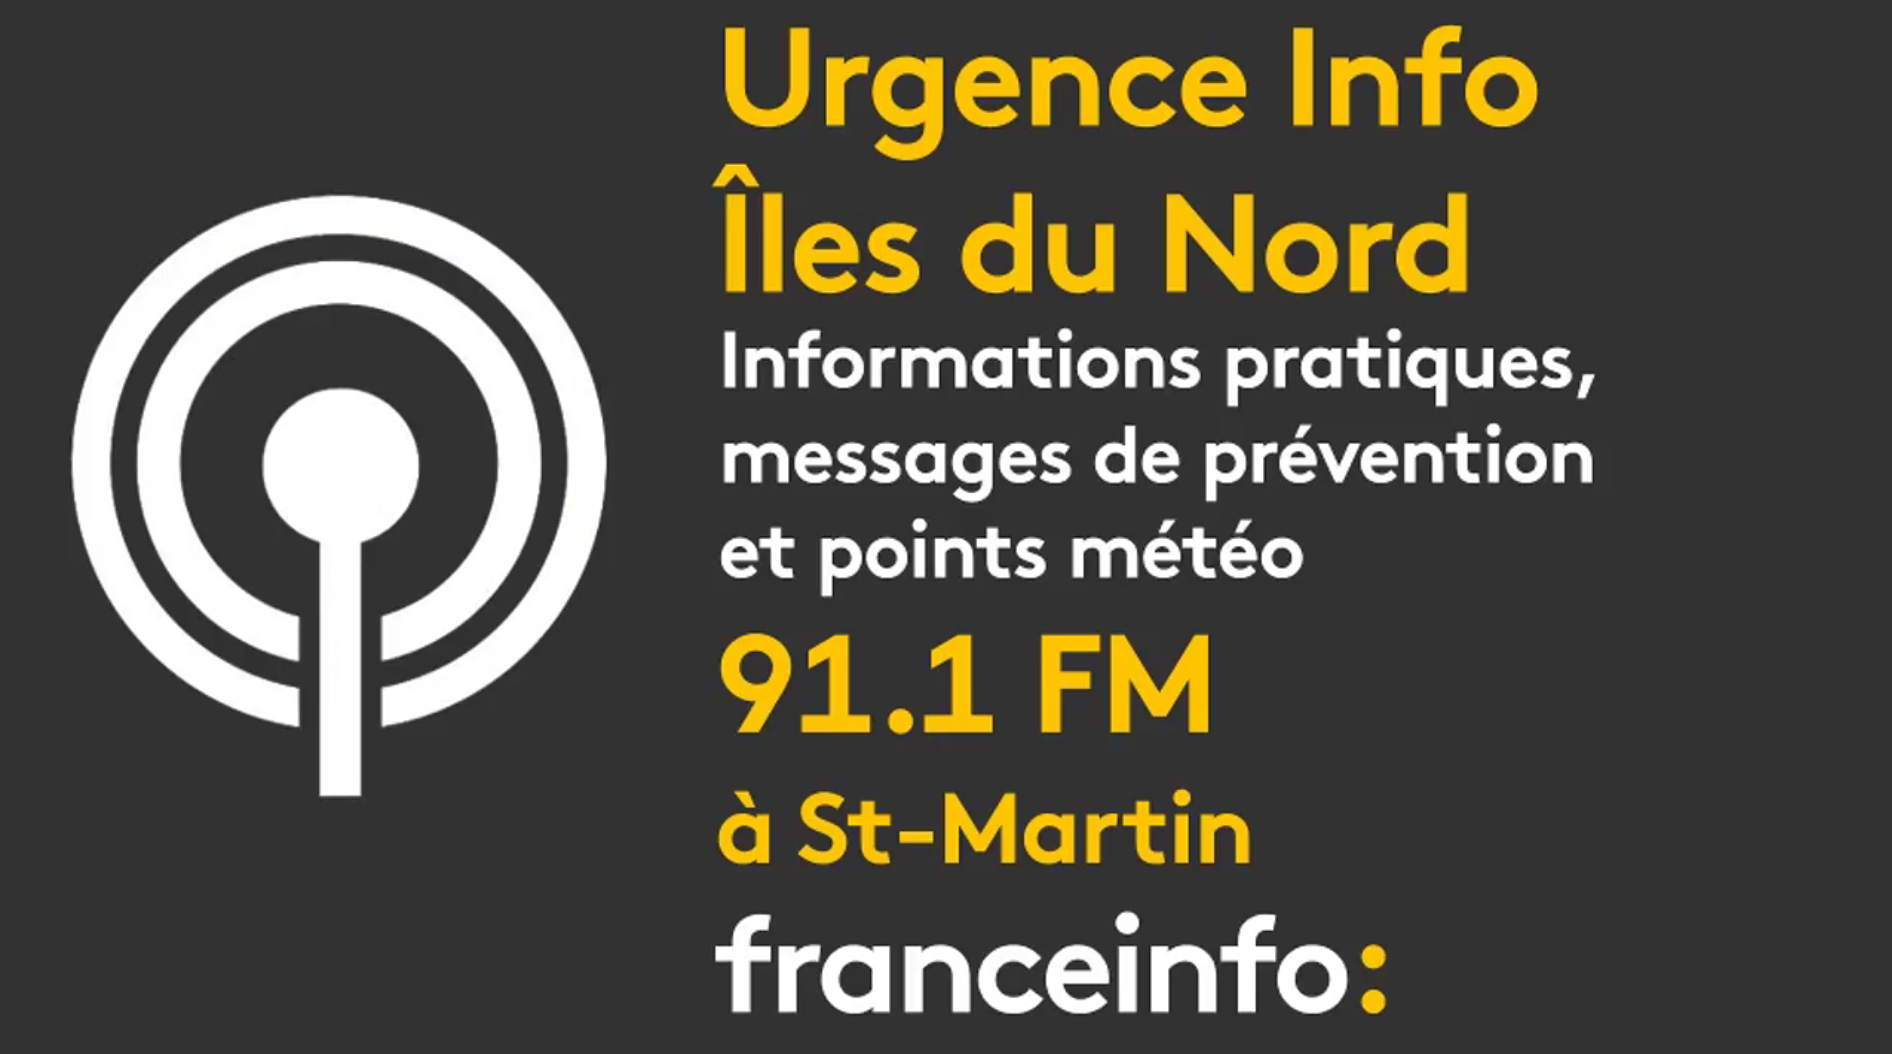 Radio France lance une radio d'urgence